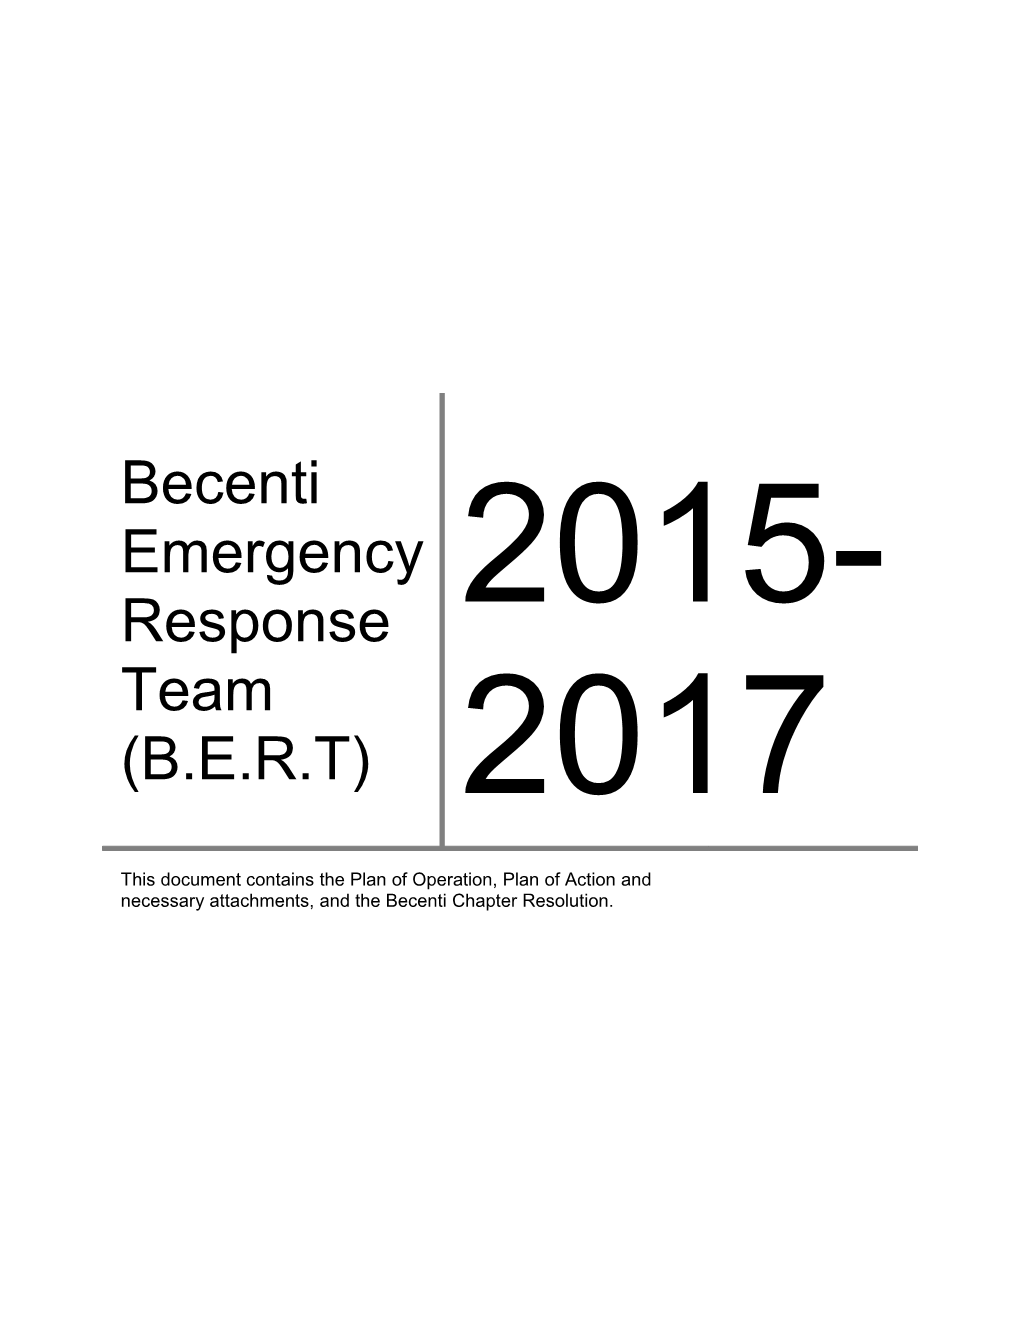 Becenti Emergency Response Team (B.E.R.T)